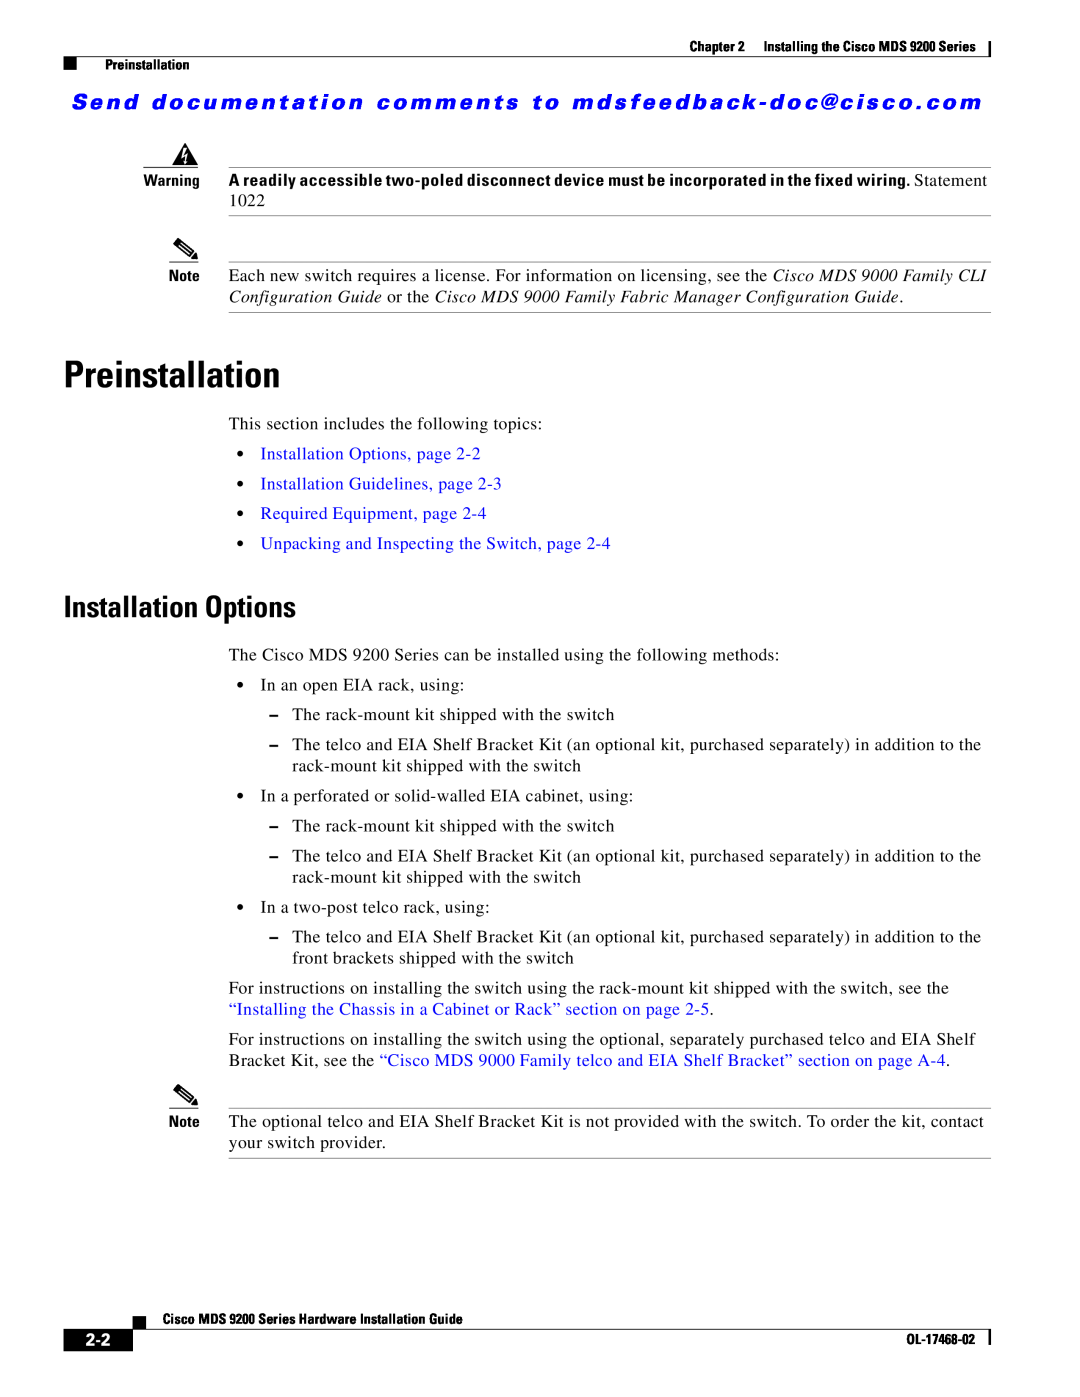 Cisco Systems MDS 9200 Series manual Preinstallation, Installation Options 